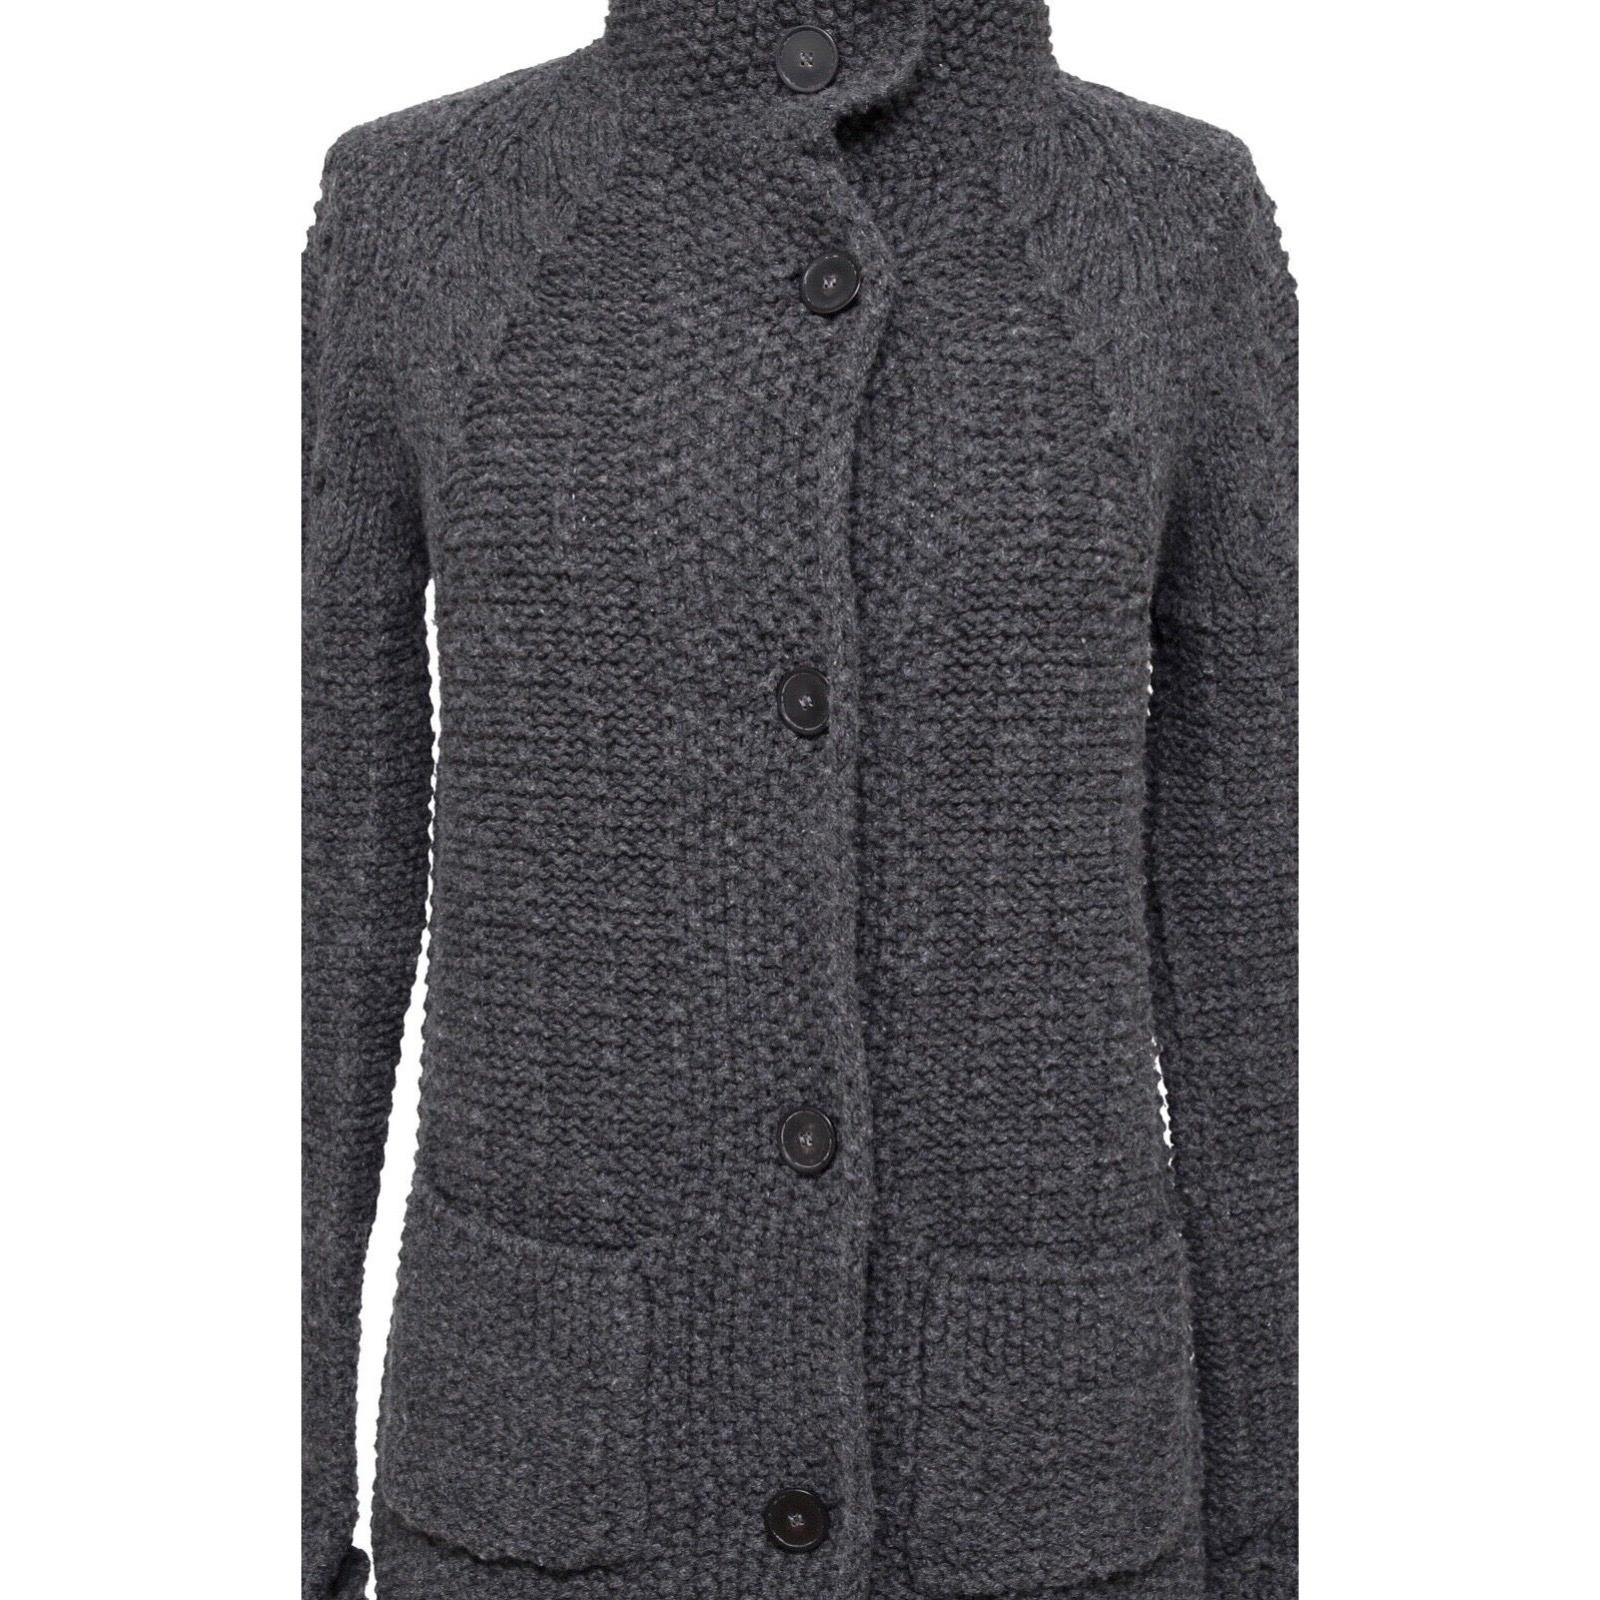 CHLOE Sweater Cardigan Knit Jacket CHARCOAL GREY Long Sleeve Sz XS 2011 For Sale 1